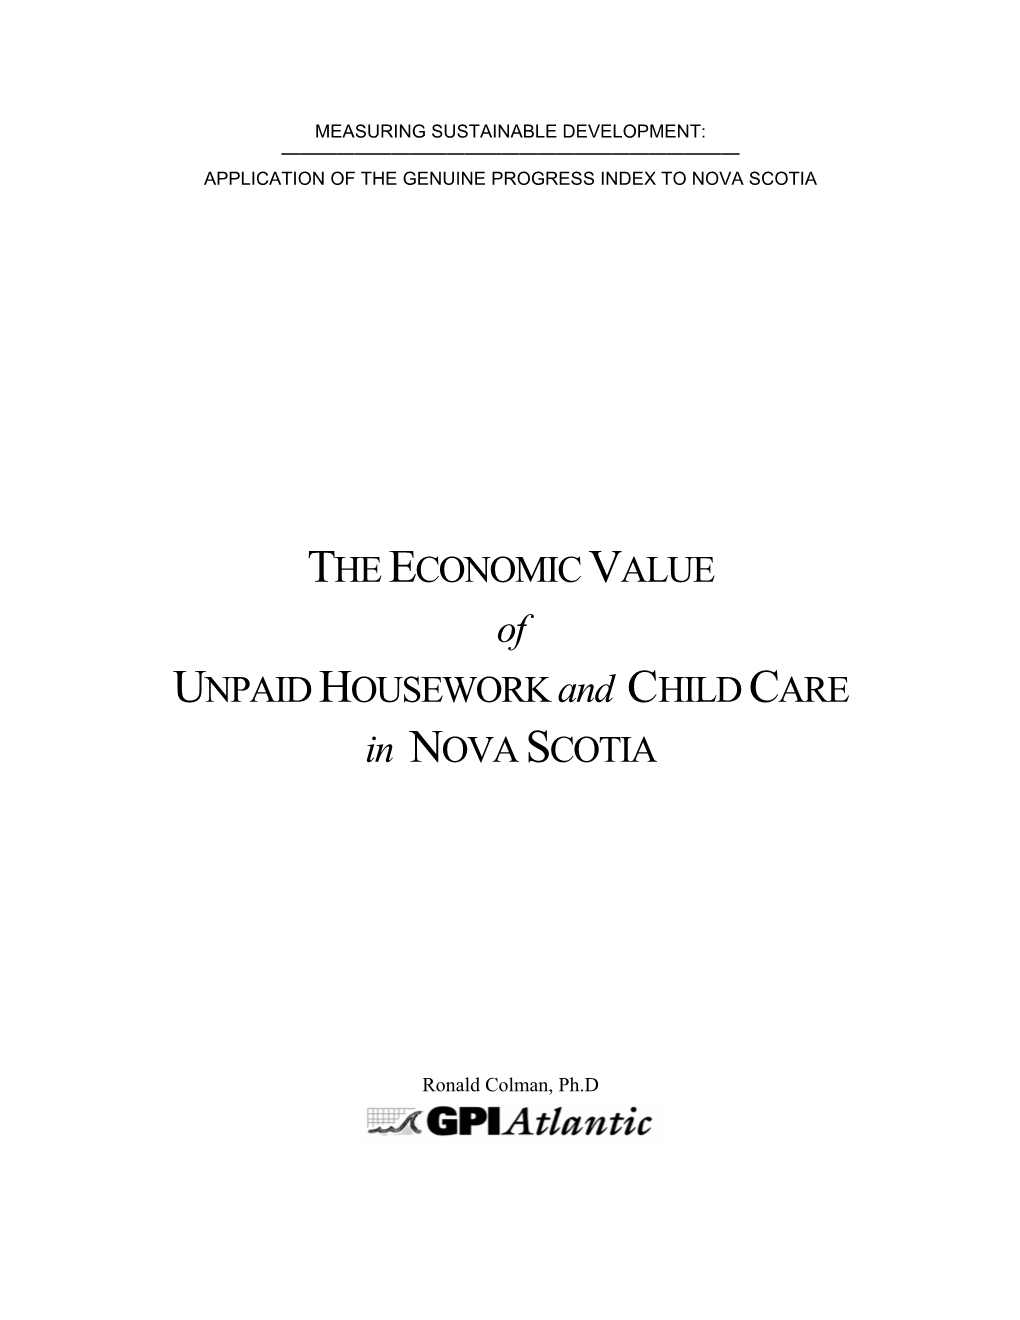 THE ECONOMIC VALUE UNPAID HOUSEWORK and CHILD CARE in NOVA SCOTIA